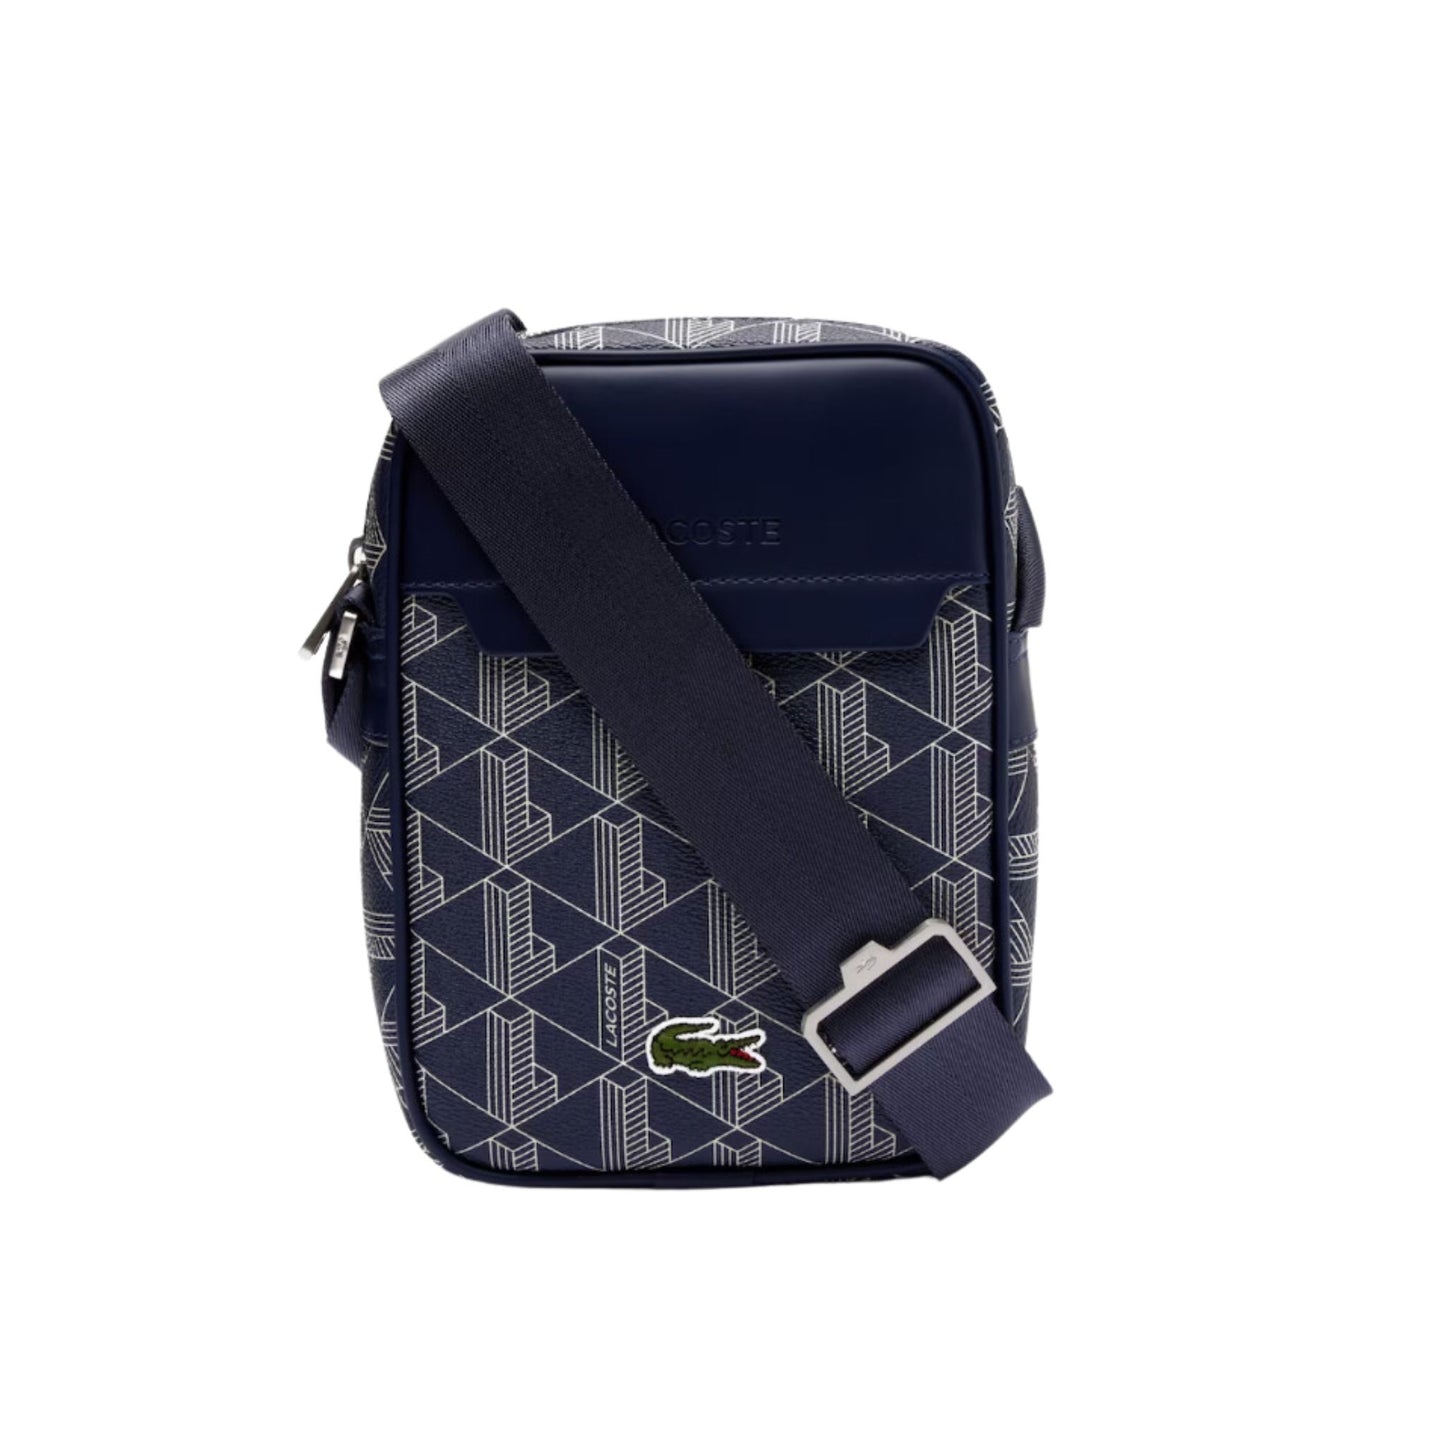 LACOSTE Keychain Feature Shoulder Bag